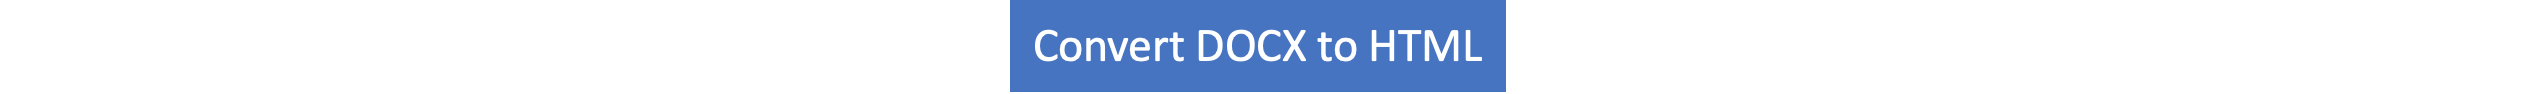 DOCX a HTML